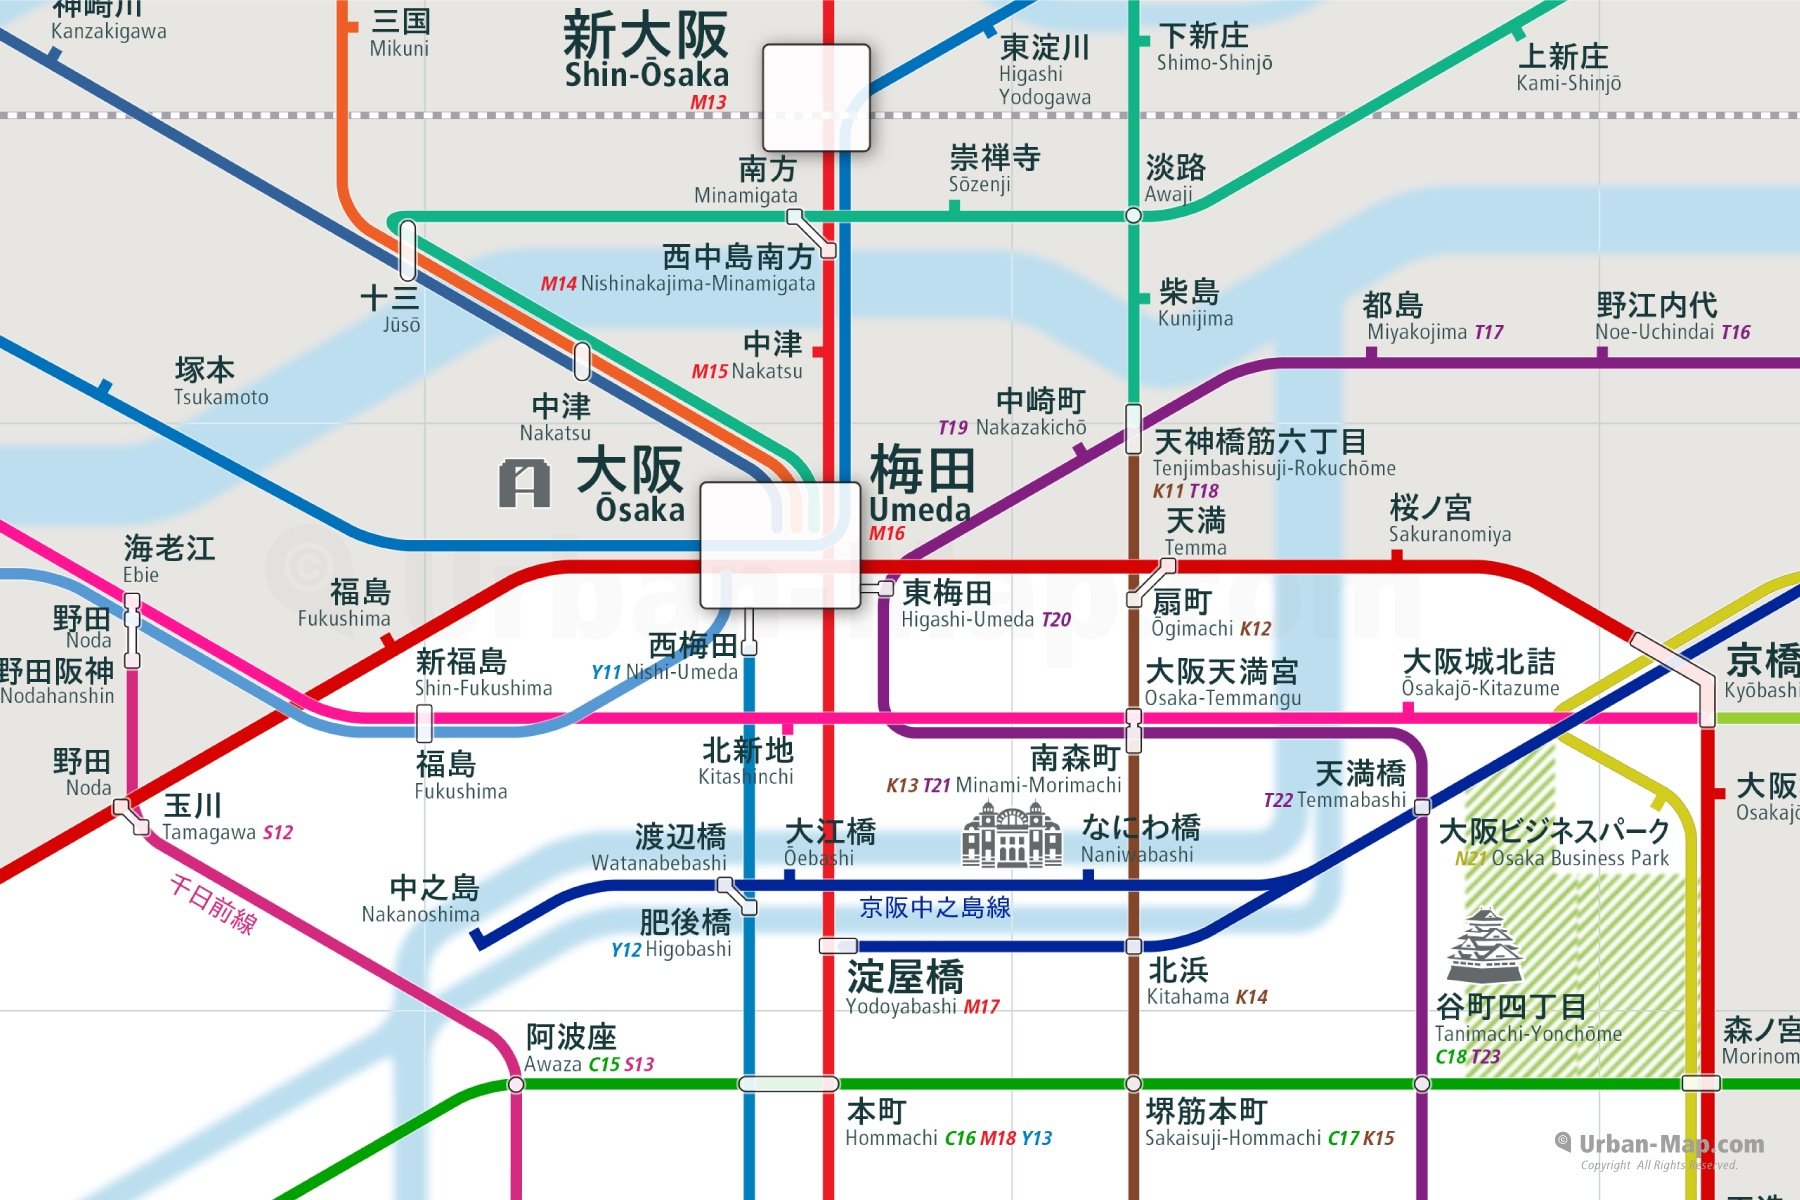 Osaka City Rail Map Japanese shows the train and public transportation routes of Subway, JR West, Hankyu, Hanshin, Keihan - Close-Up